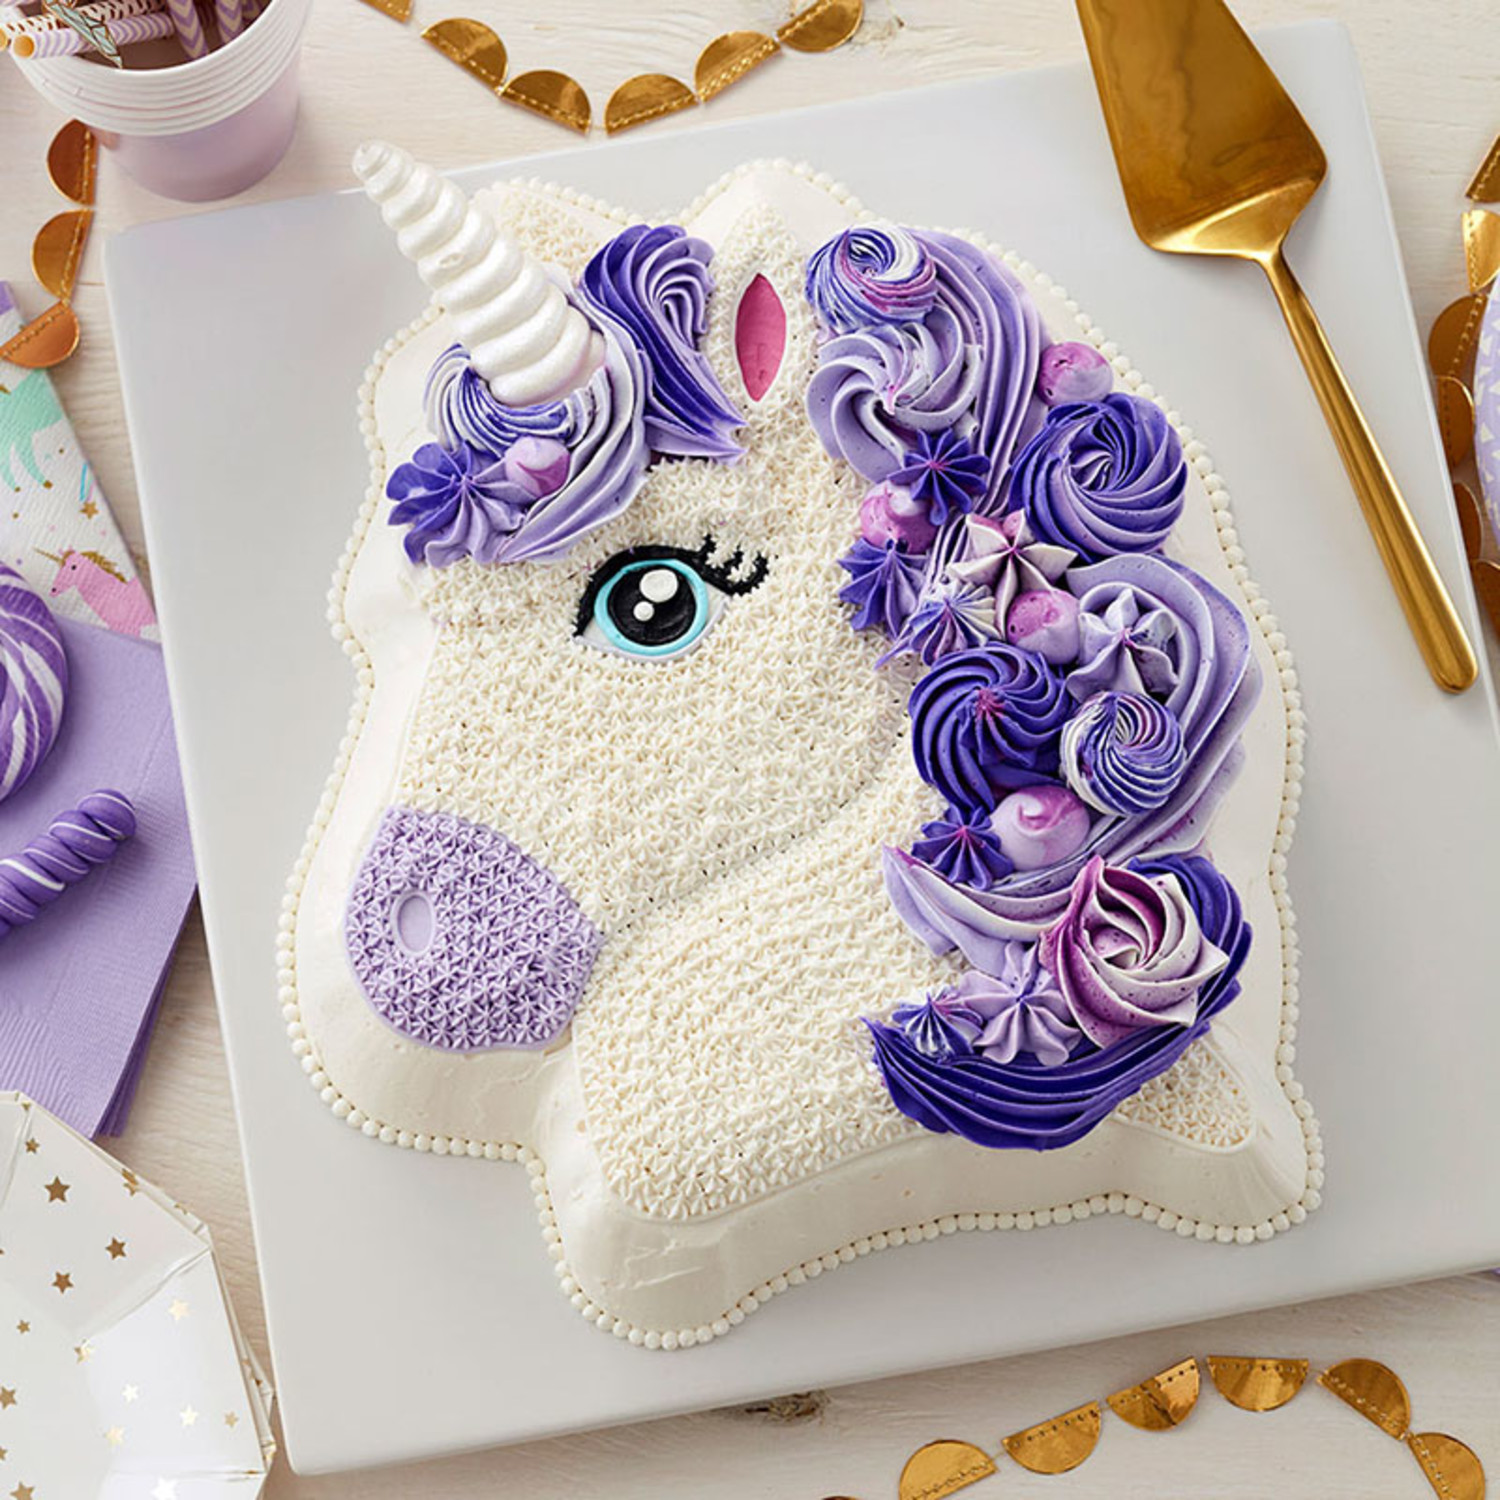 Puking Unicorn Cake - The Tough Cookie